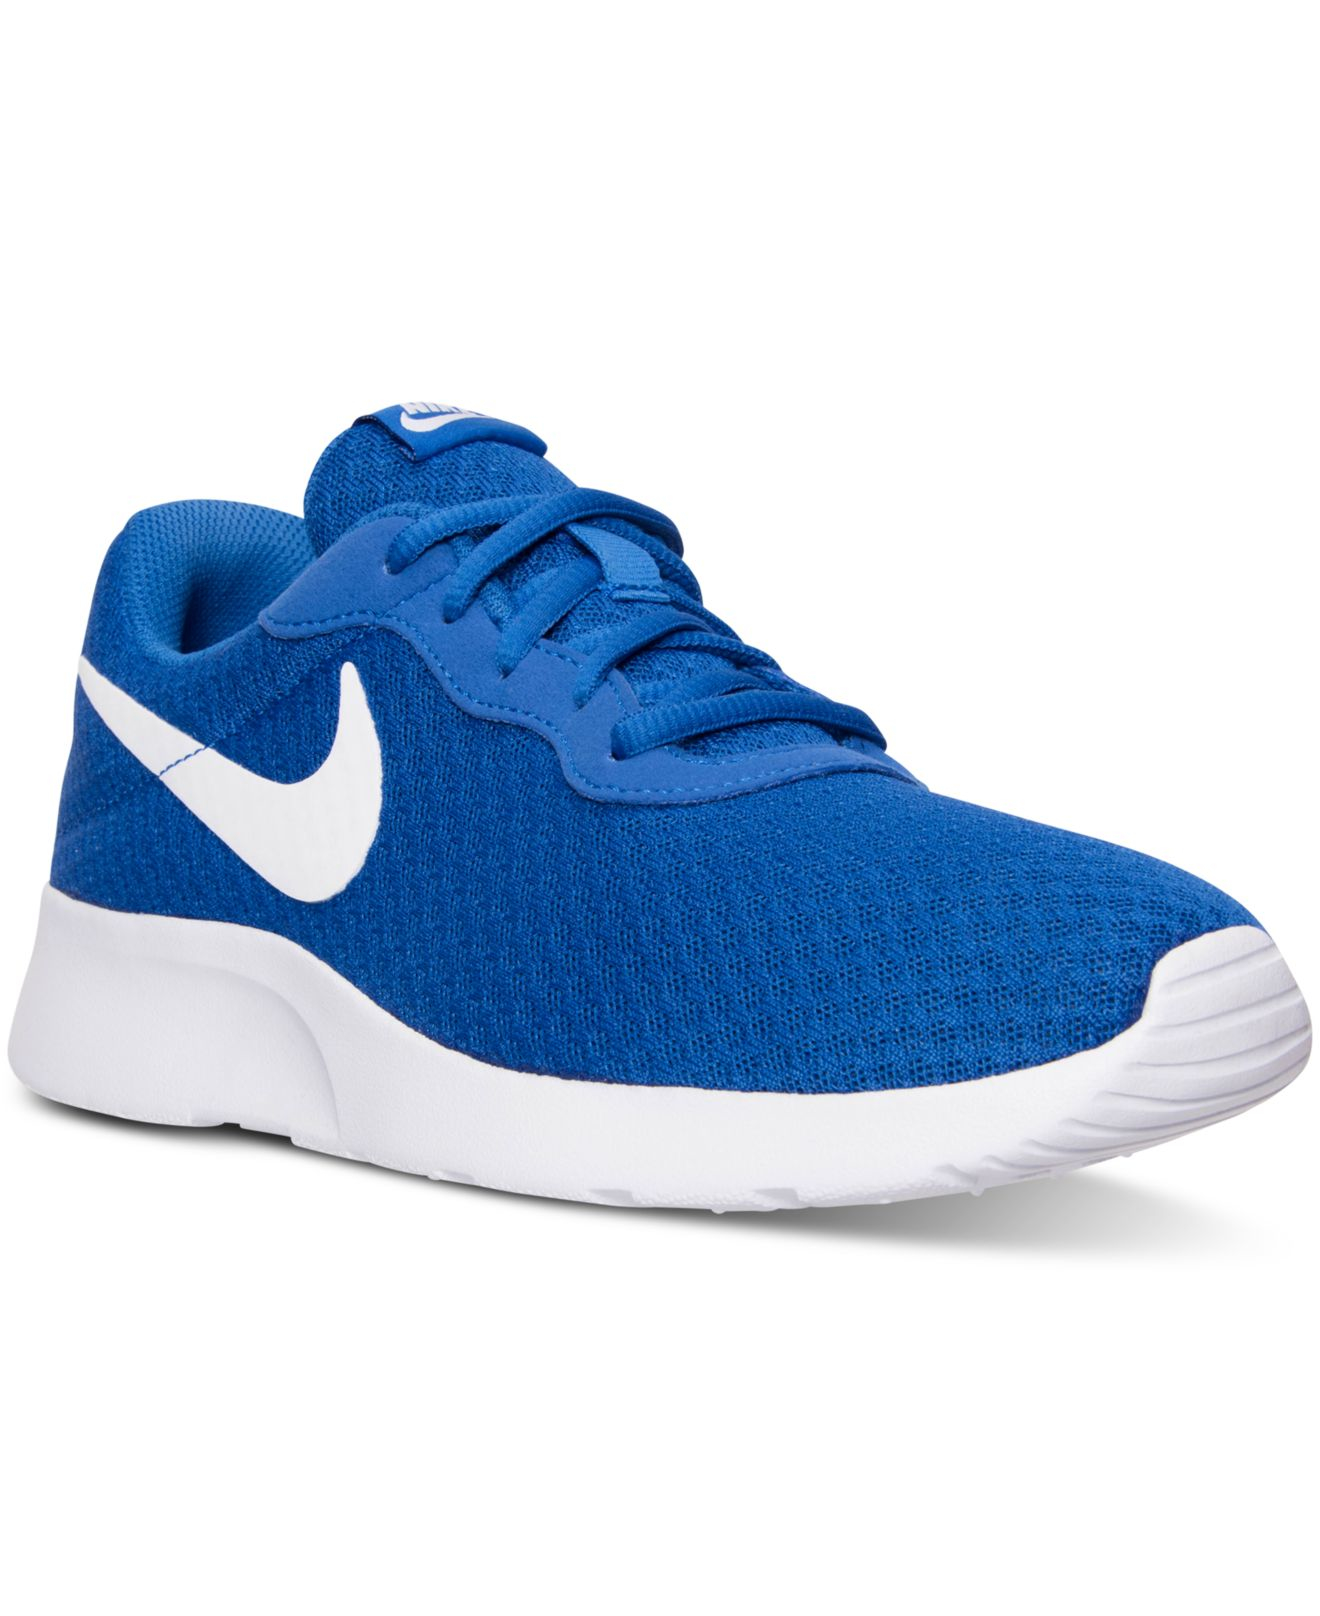 Lyst - Nike Men's Tanjun Casual Sneakers From Finish Line in Blue for Men